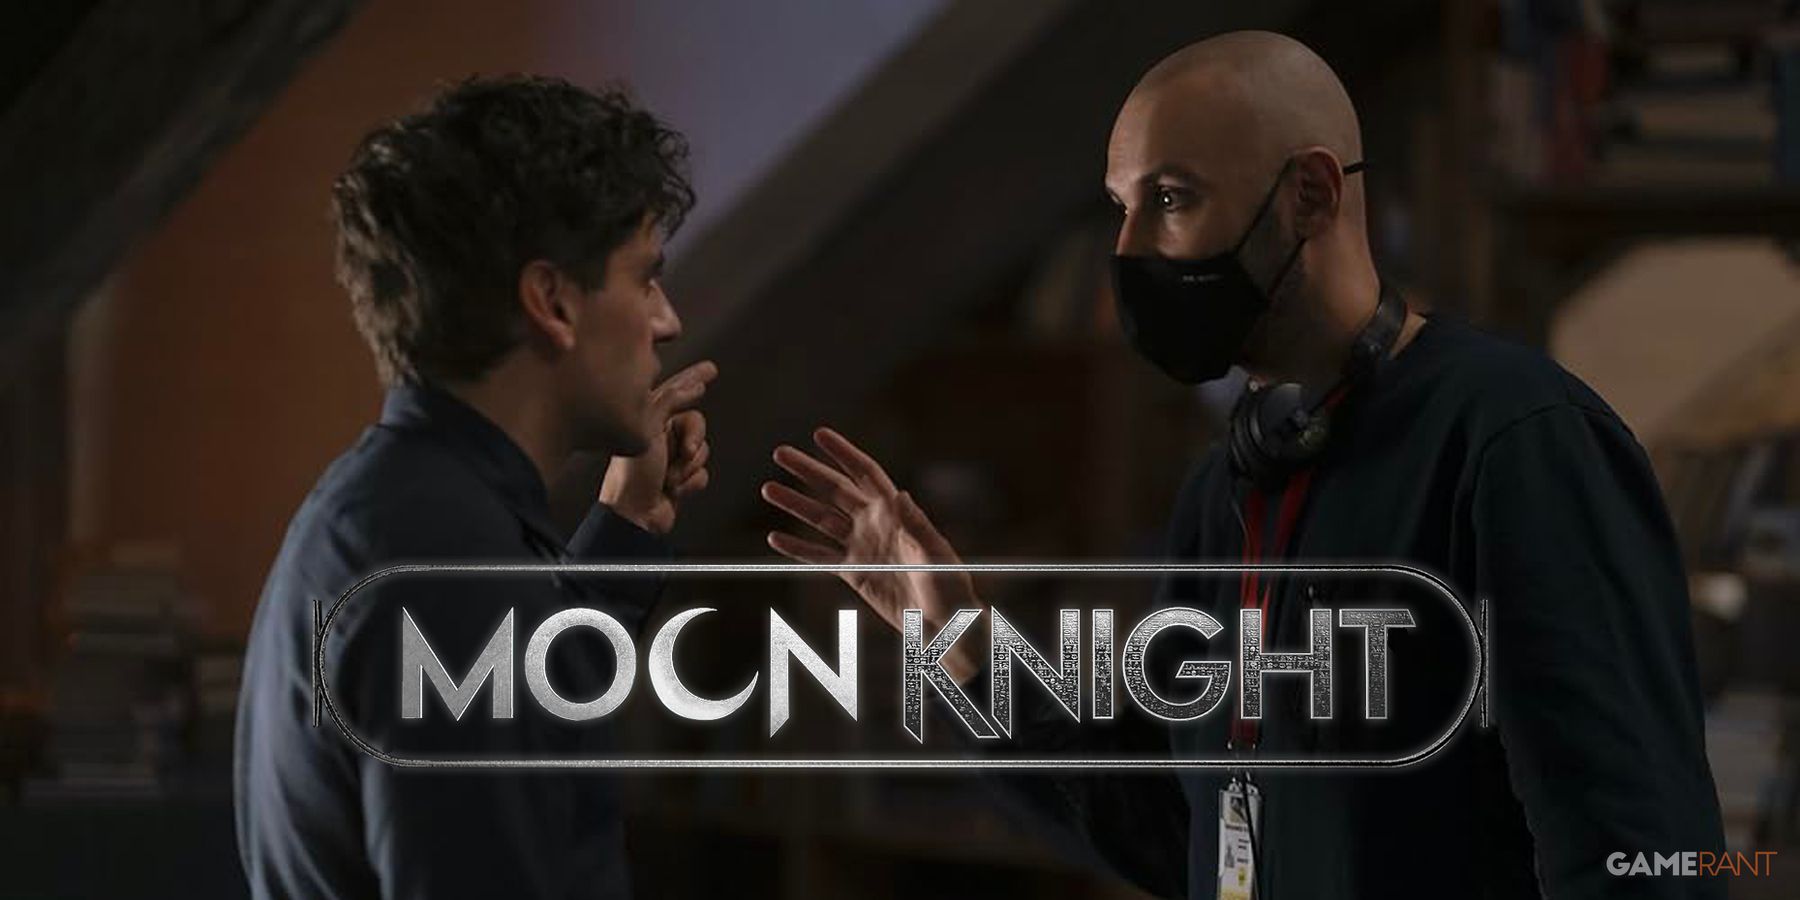 Moon Knight' Season 2: Everything We Know